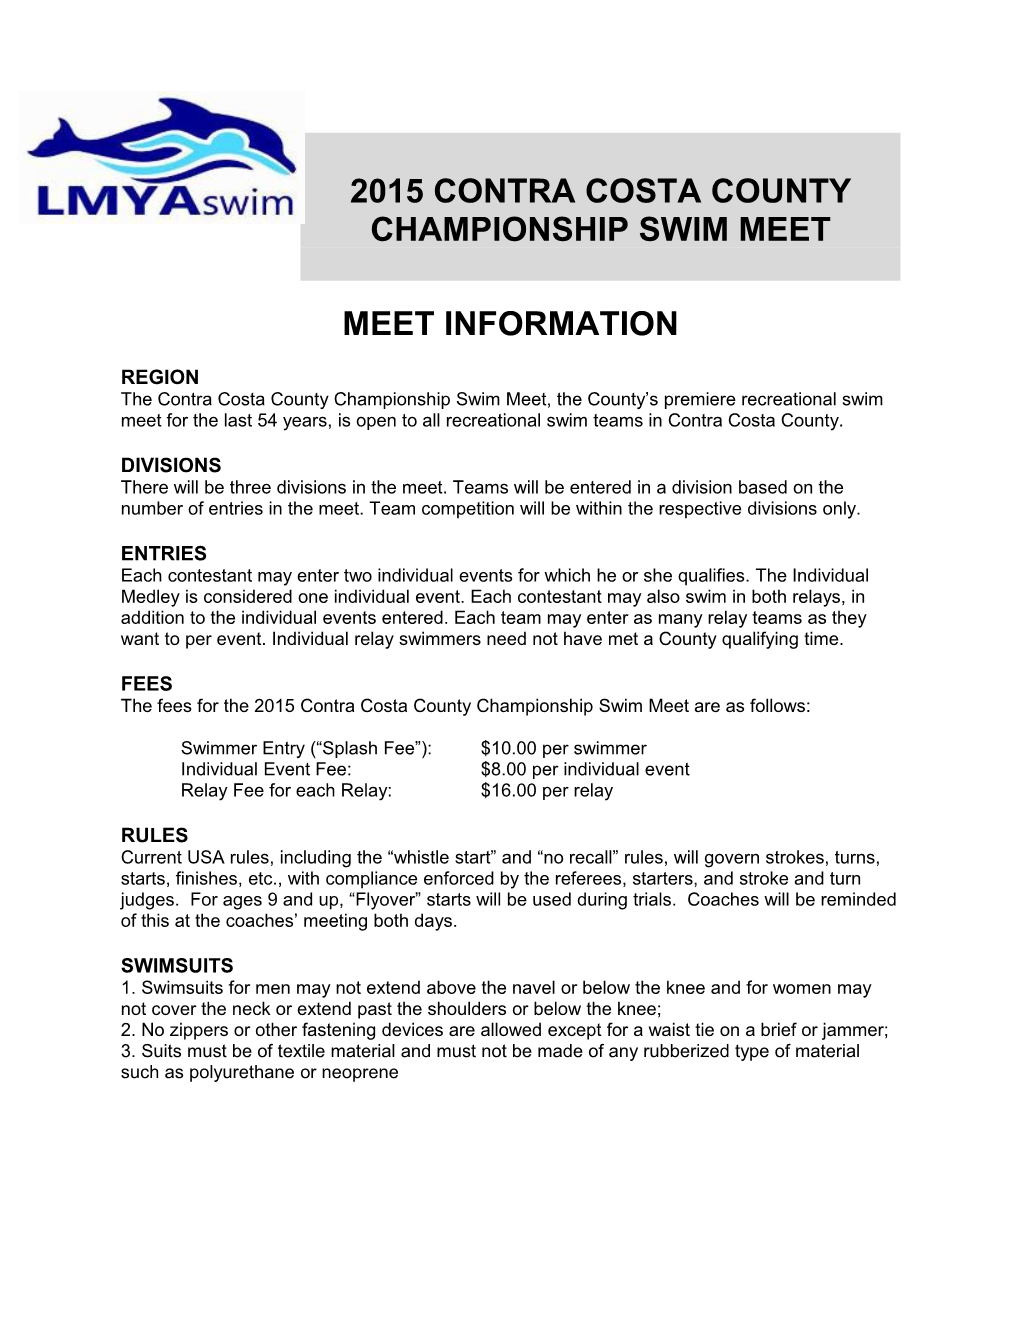 2015 Contra Costa County Championship Swim Meet